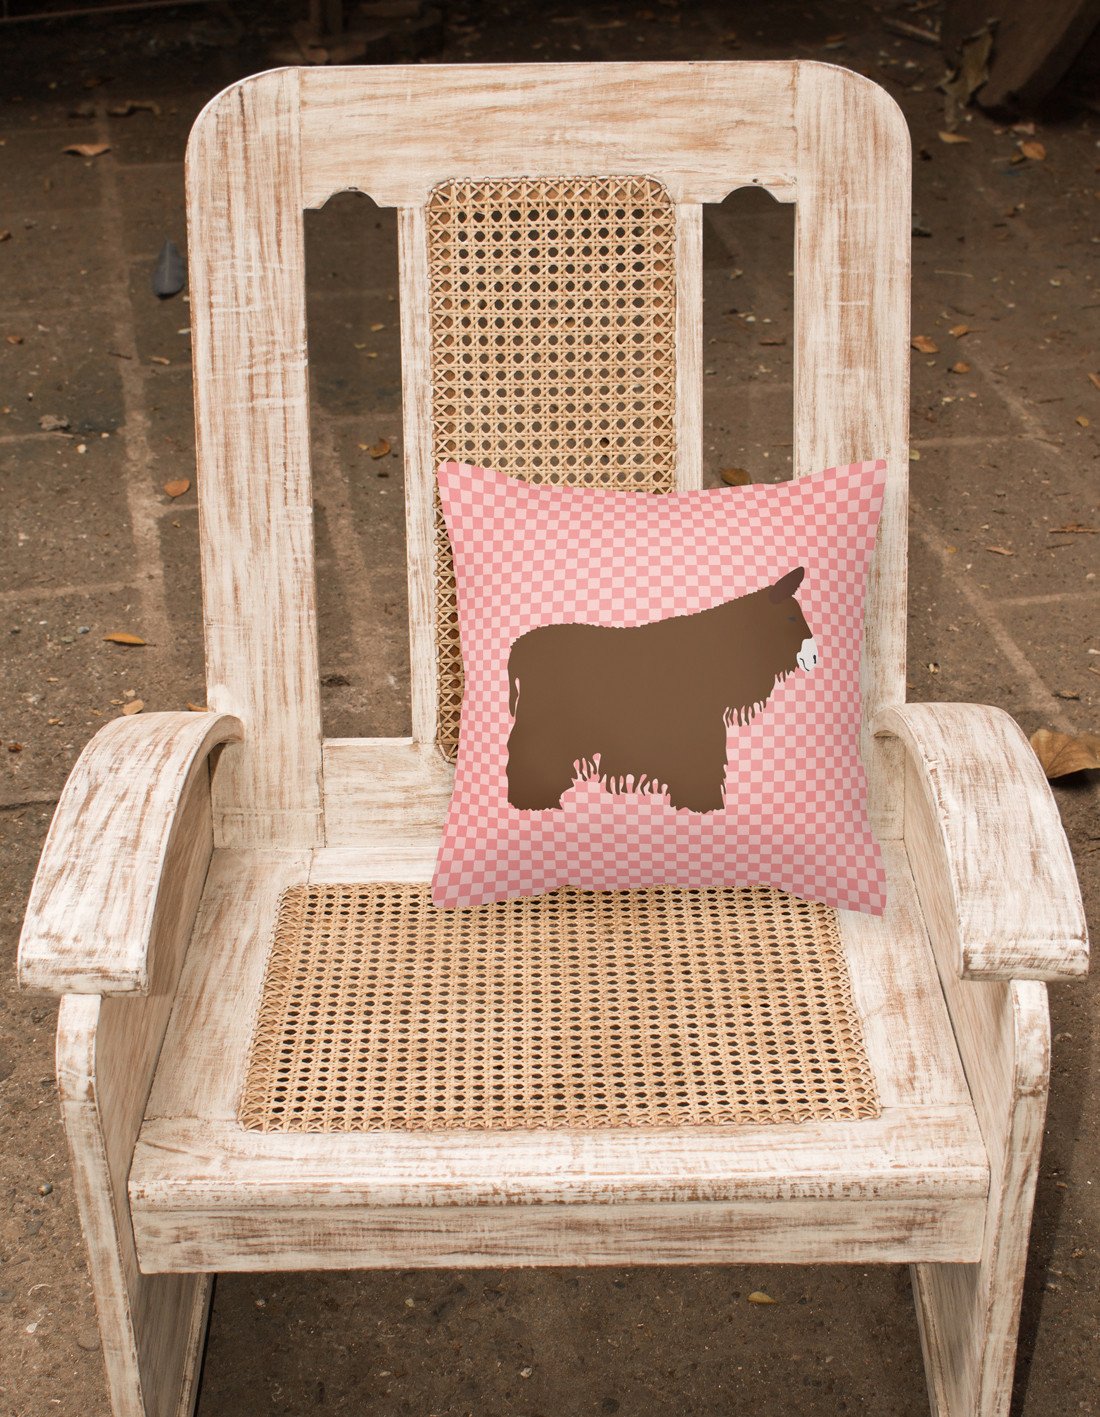 Poitou Poiteuin Donkey Pink Check Fabric Decorative Pillow BB7852PW1818 by Caroline's Treasures